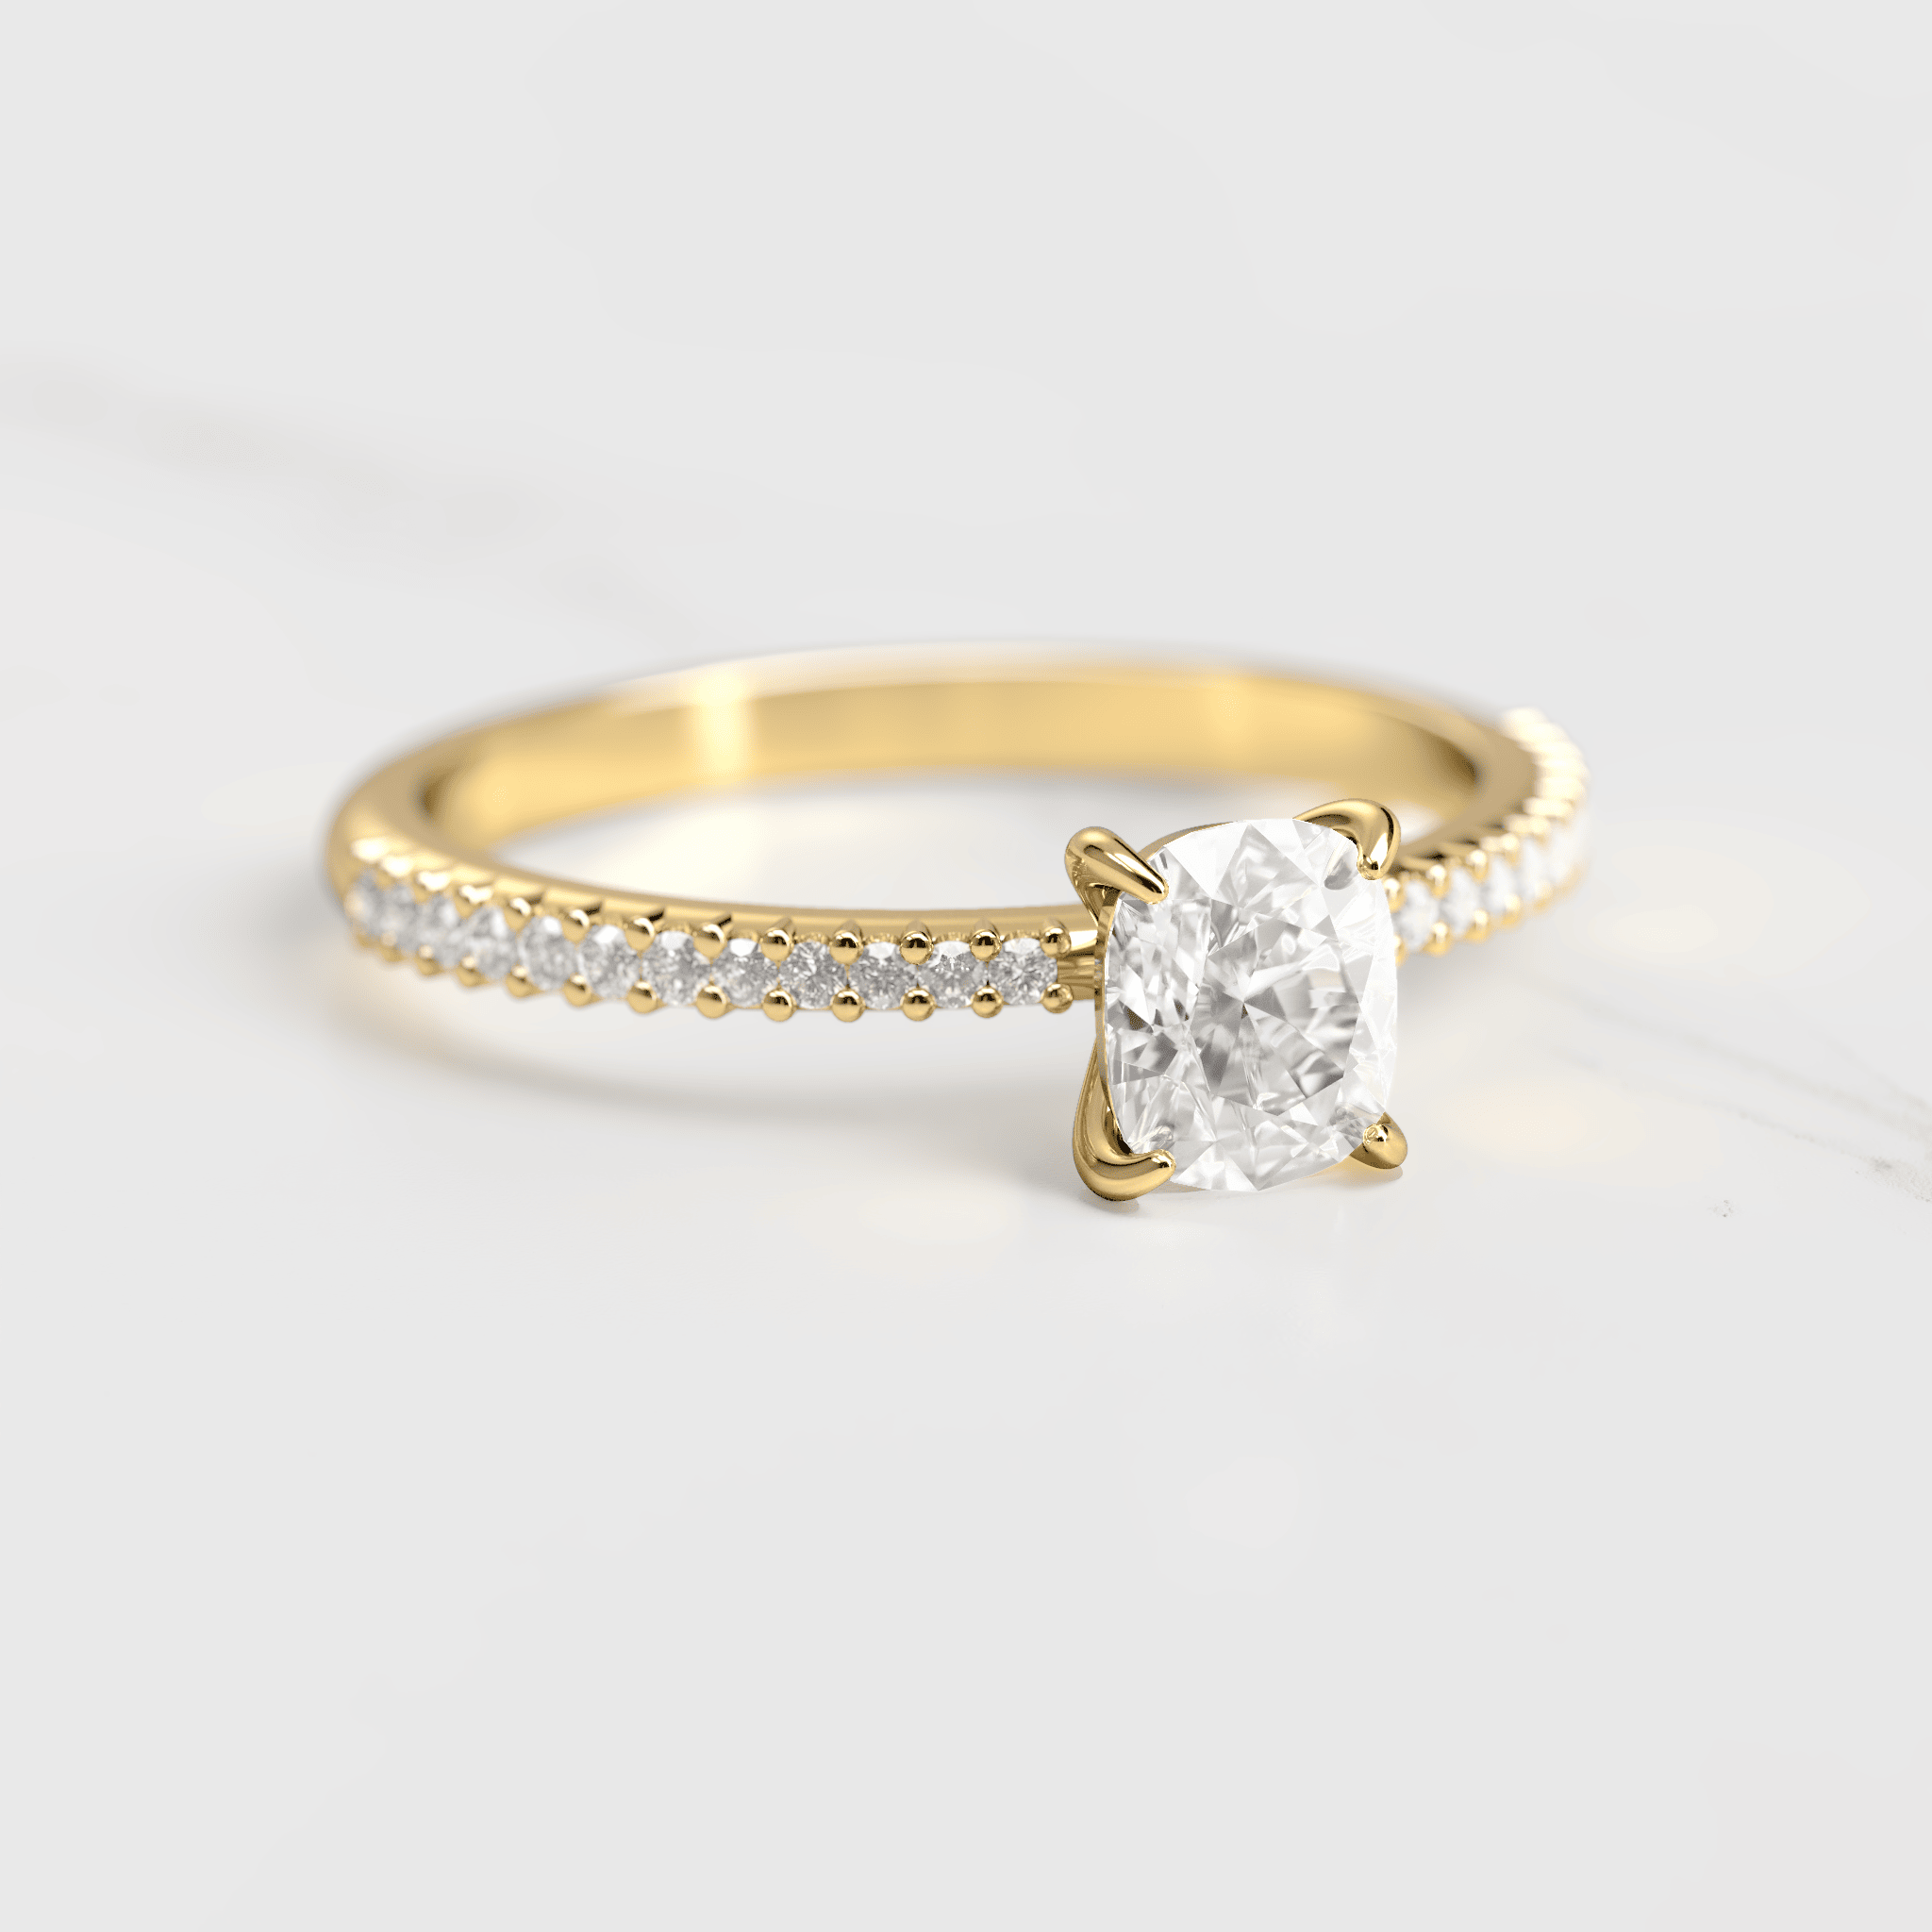 CUSHION HALF PAVE TAPERED DIAMOND RING - 14k white gold / 1.25ct / lab diamond